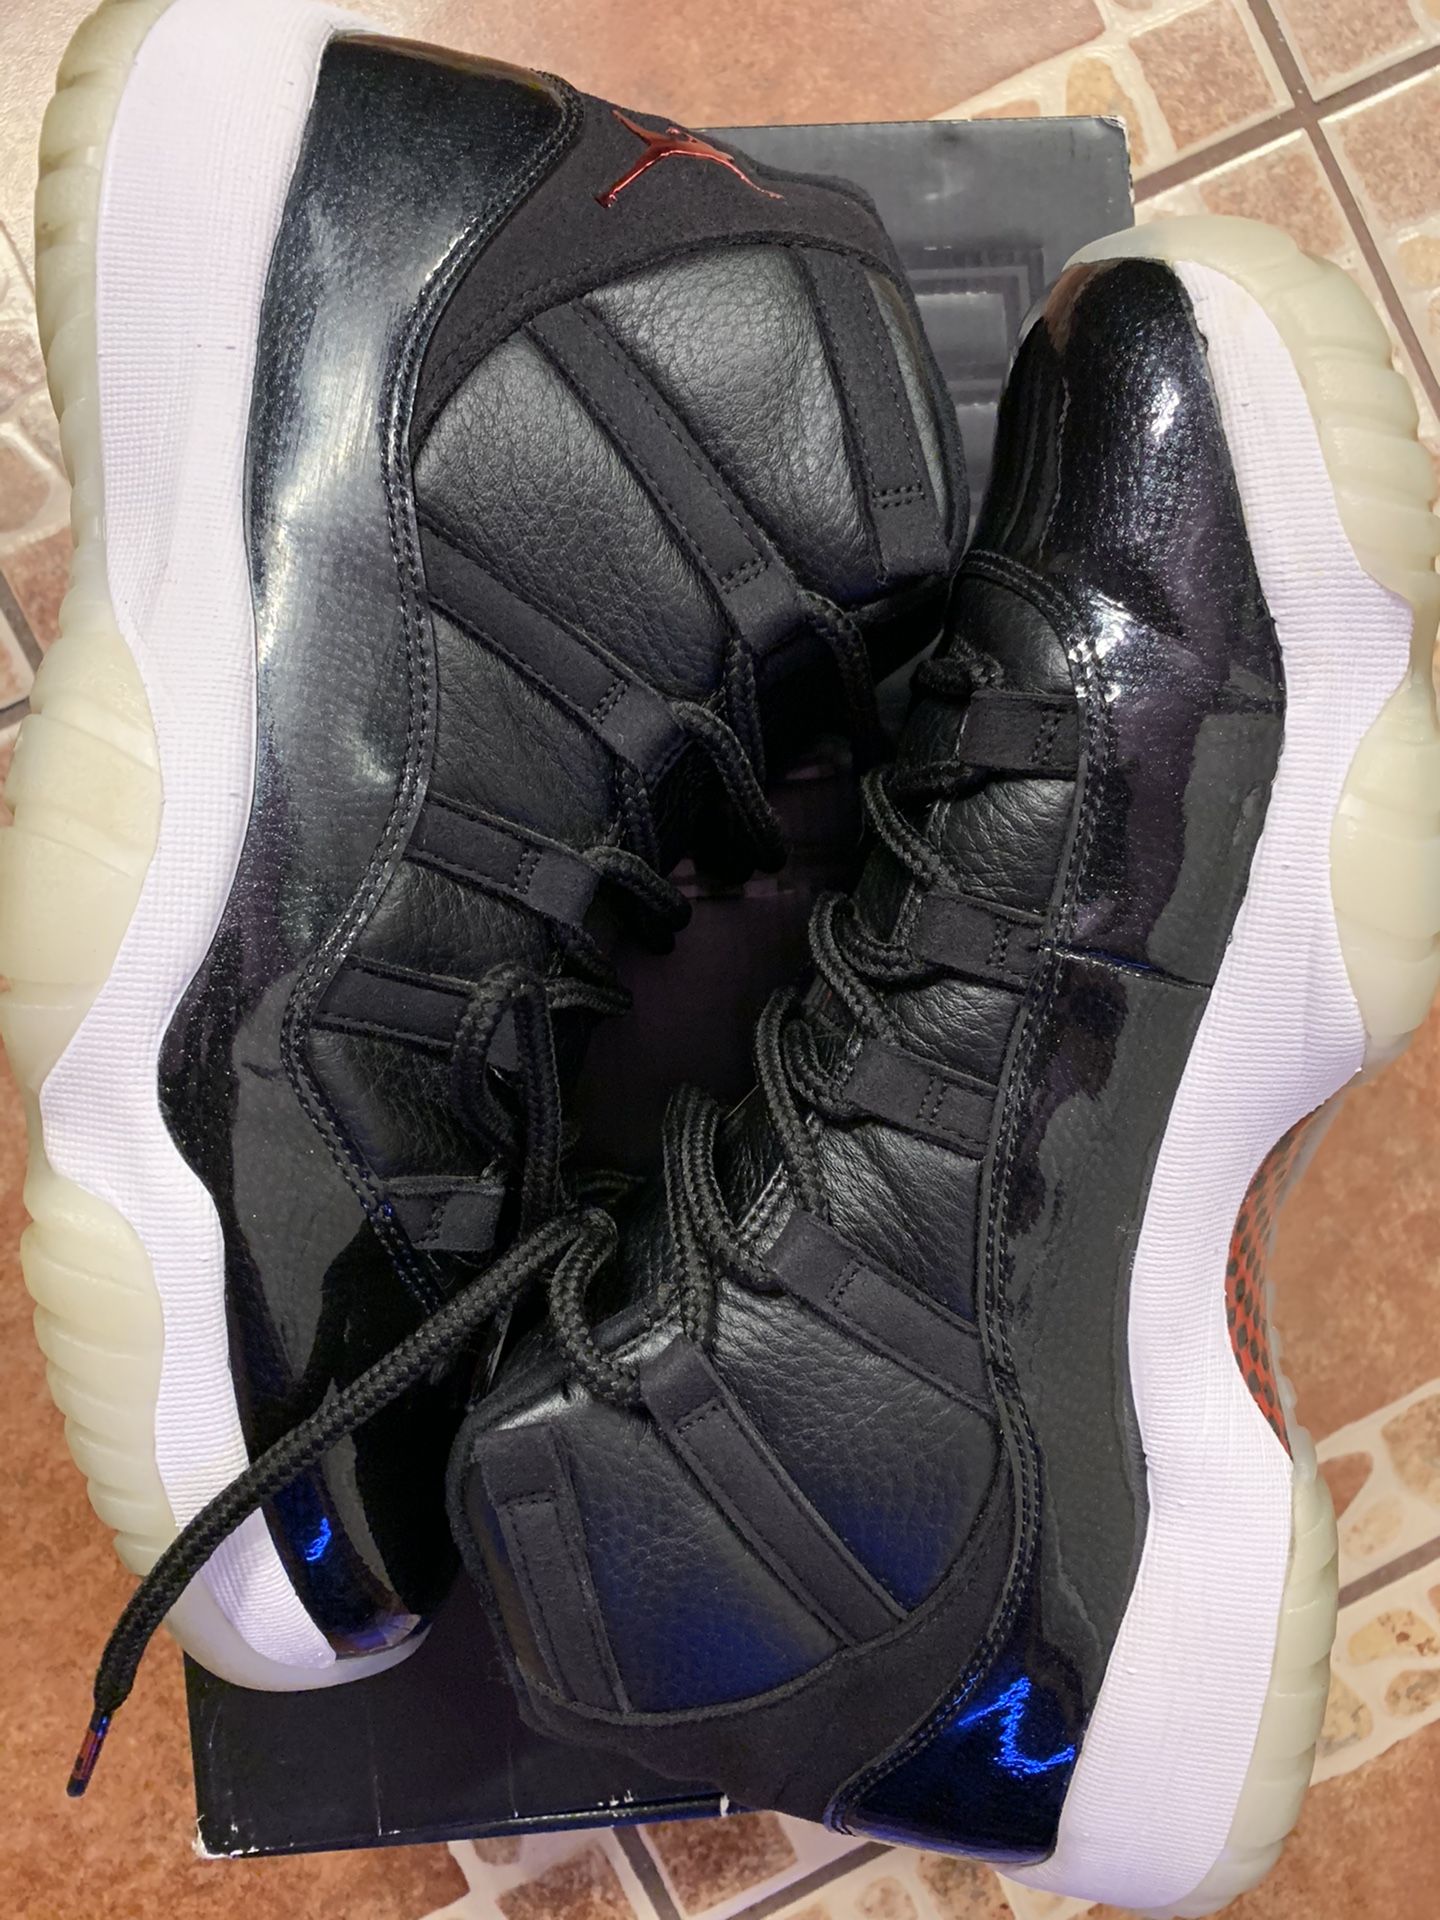 Jordan retro 11 72-10, Nike Chuckposites, Infared 6 size 11.5